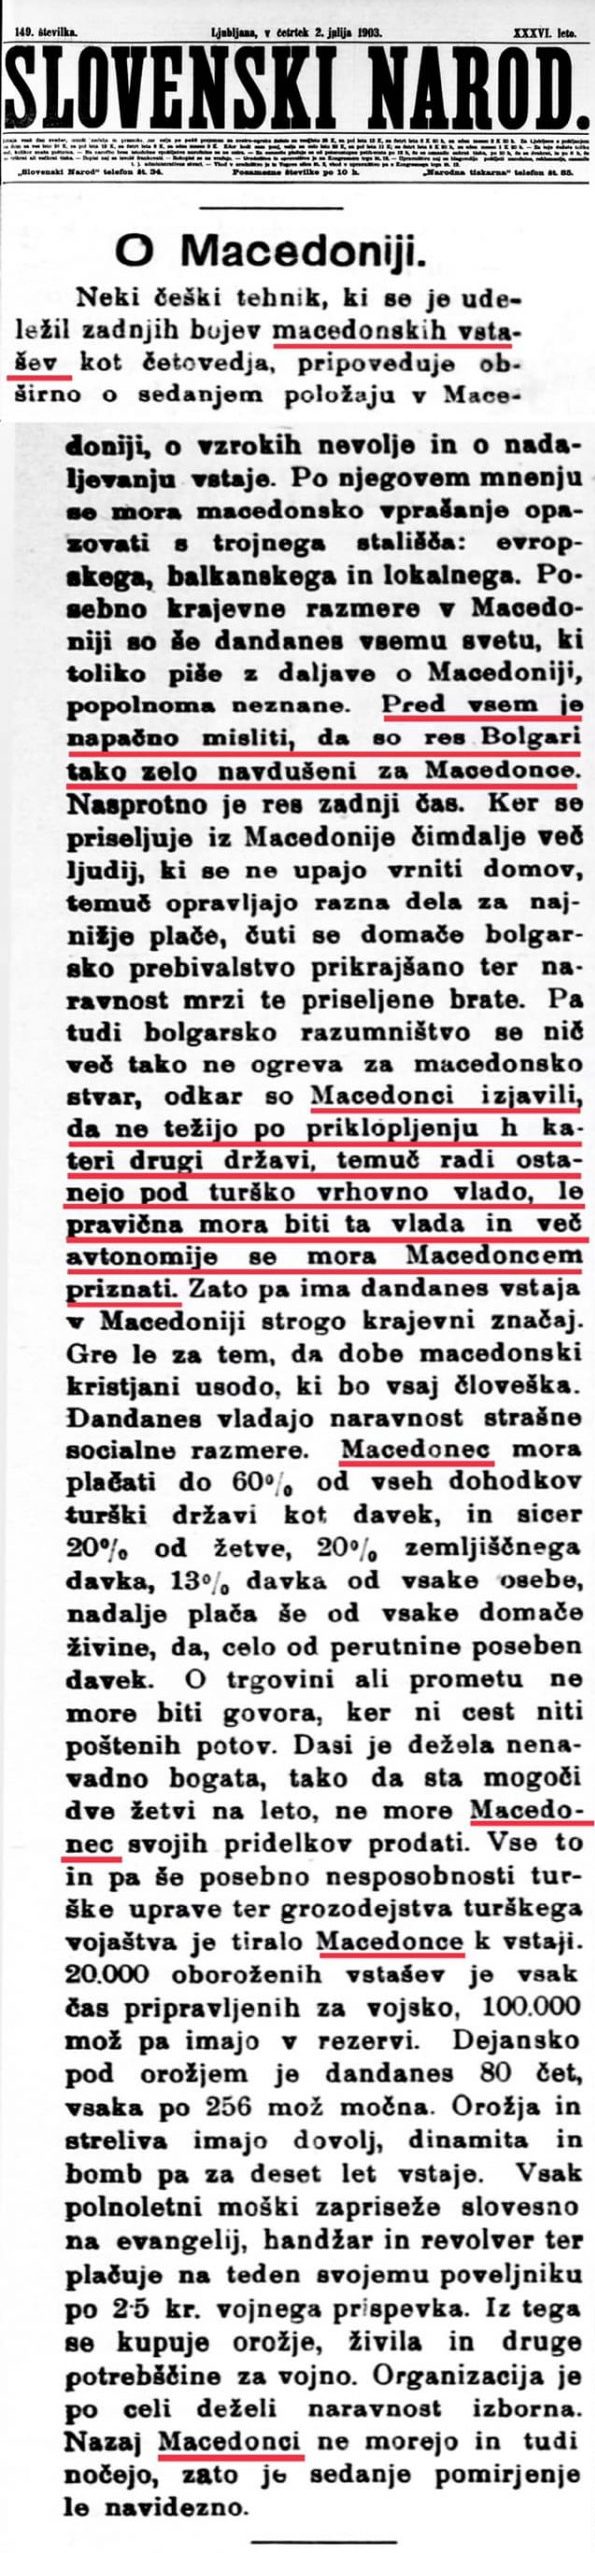 1903.07.02_Slovenski Narod - O Macedoniji, Ljubljana